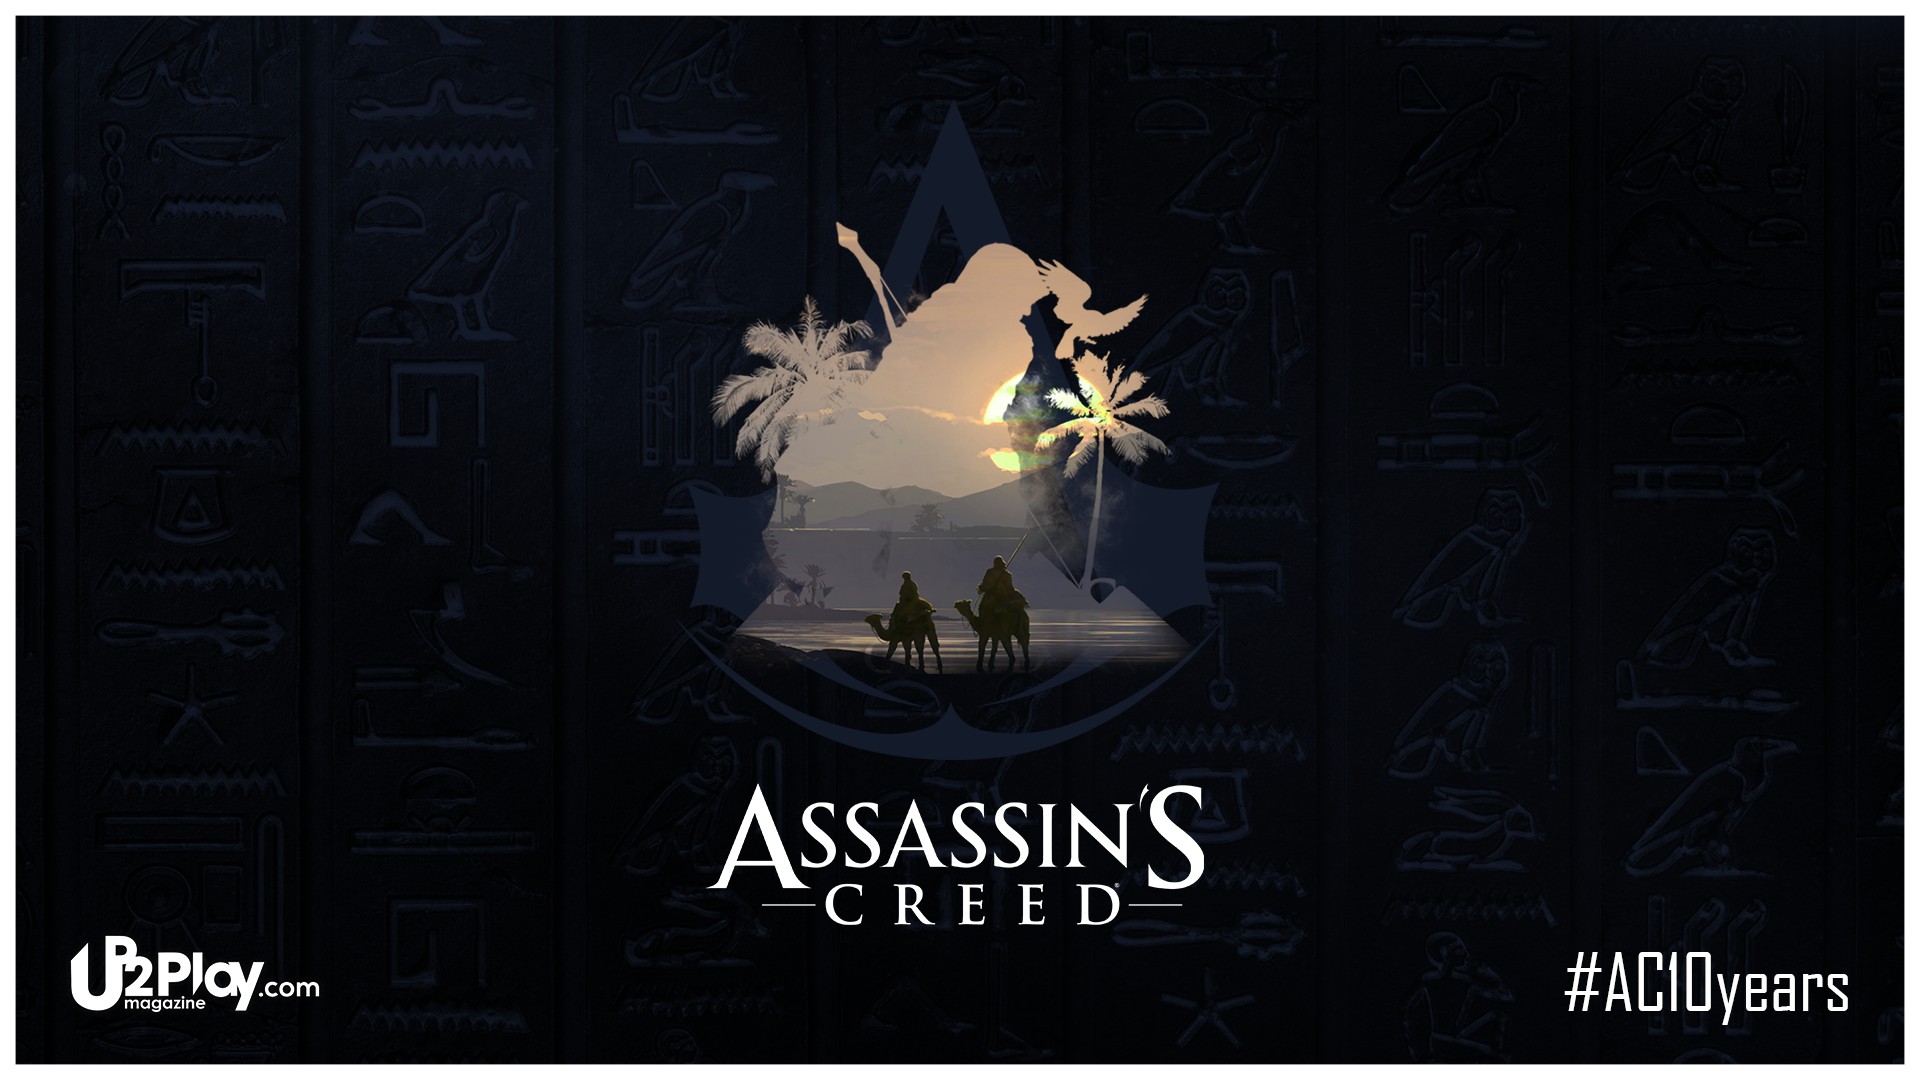 Assassins Creed, Assassins Creed: Brotherhood, Assassin&039;s Creed:  Unity, Assassin&039;s Creed Syndicate, Video games, Ubisoft, Ubi30, Windows 10 Anniversary Wallpaper